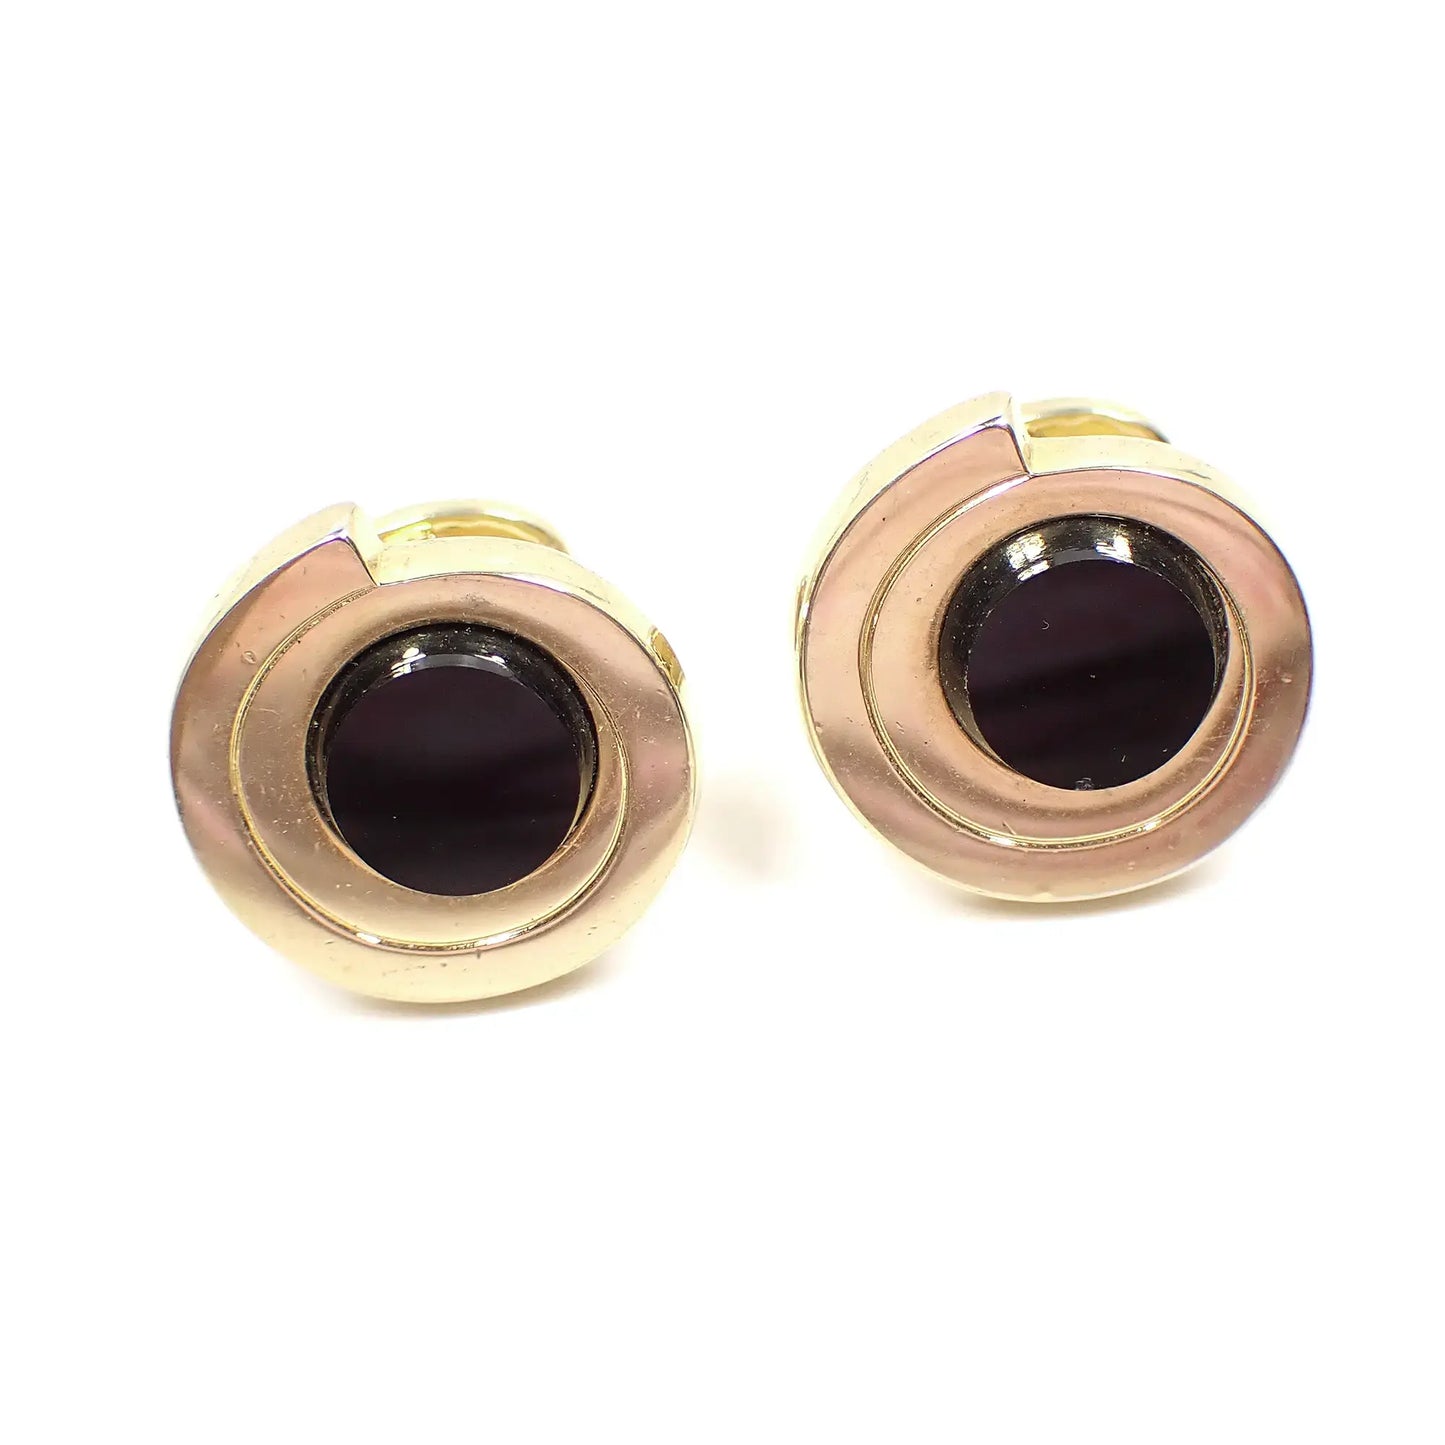 Pierre Cardin Gold Tone and Black Onyx Gemstone Vintage Cufflinks, Round Swivel Bean Back Cuff Links